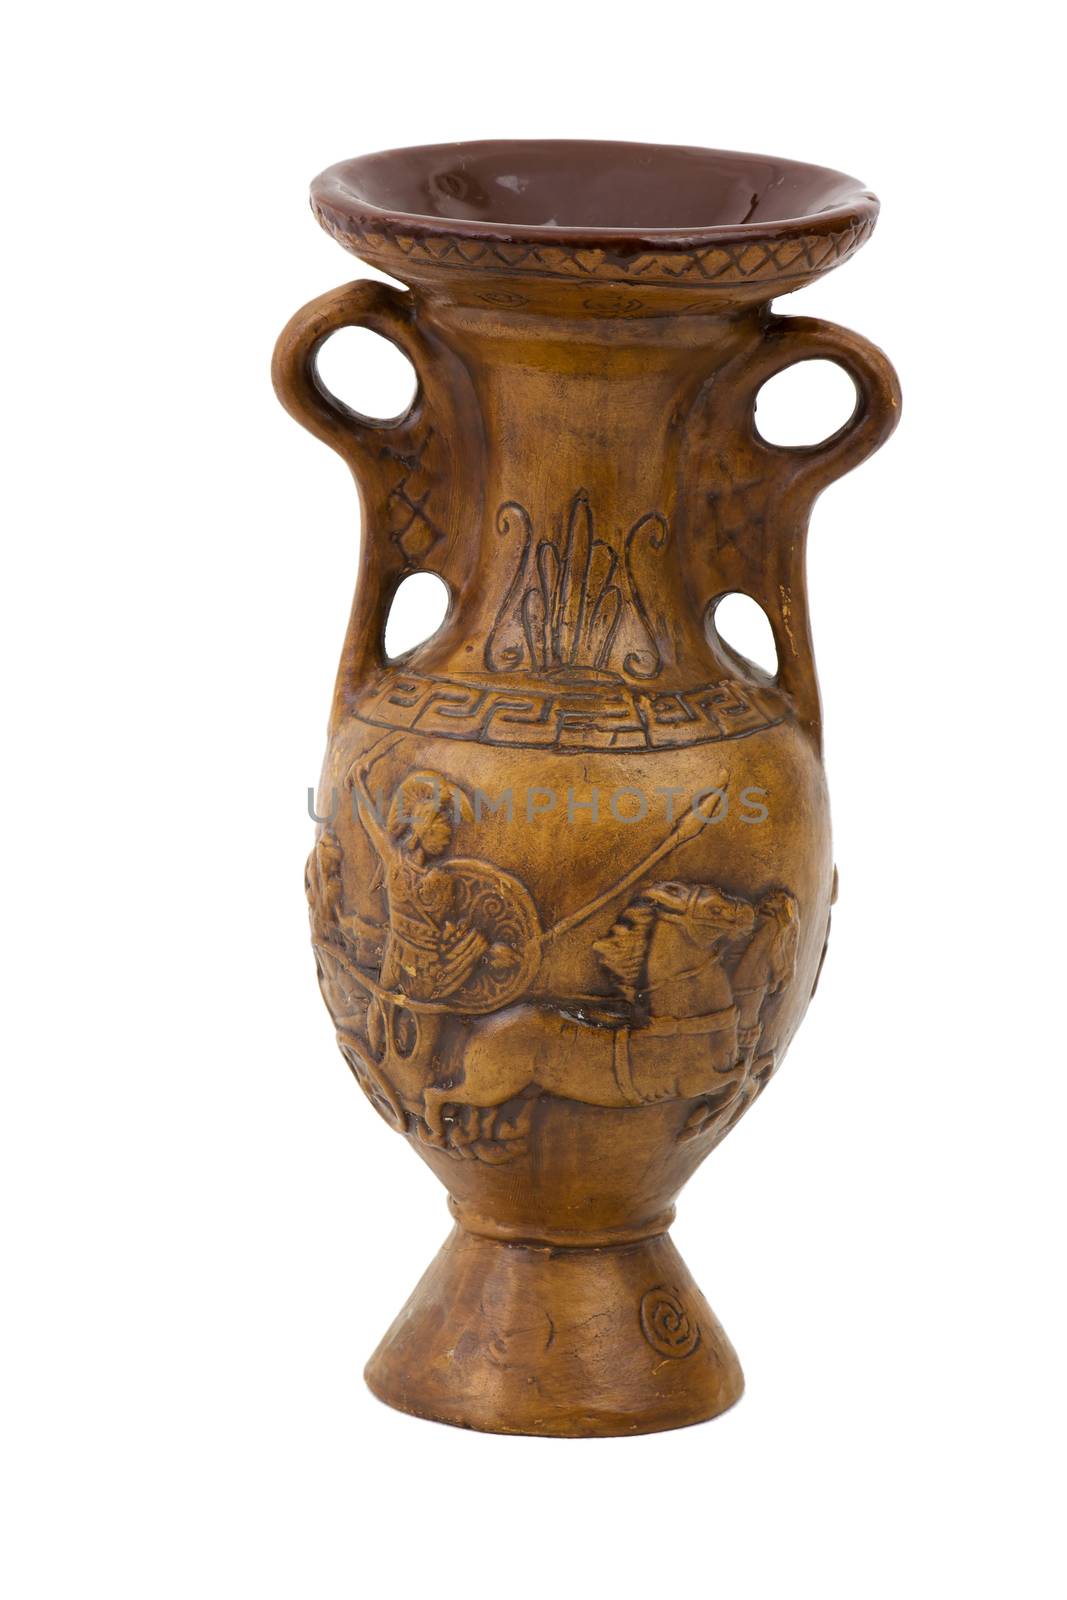 Clay pot, old ceramic vase by miradrozdowski